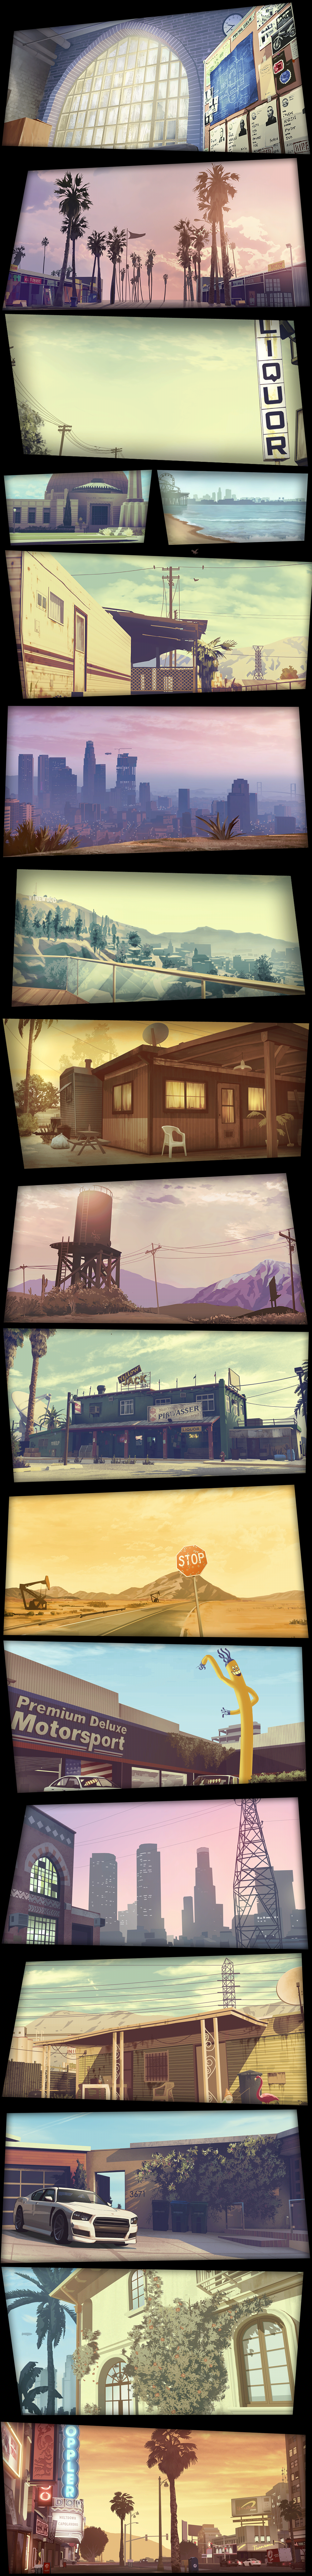 Grand Theft Auto V - Backgrounds